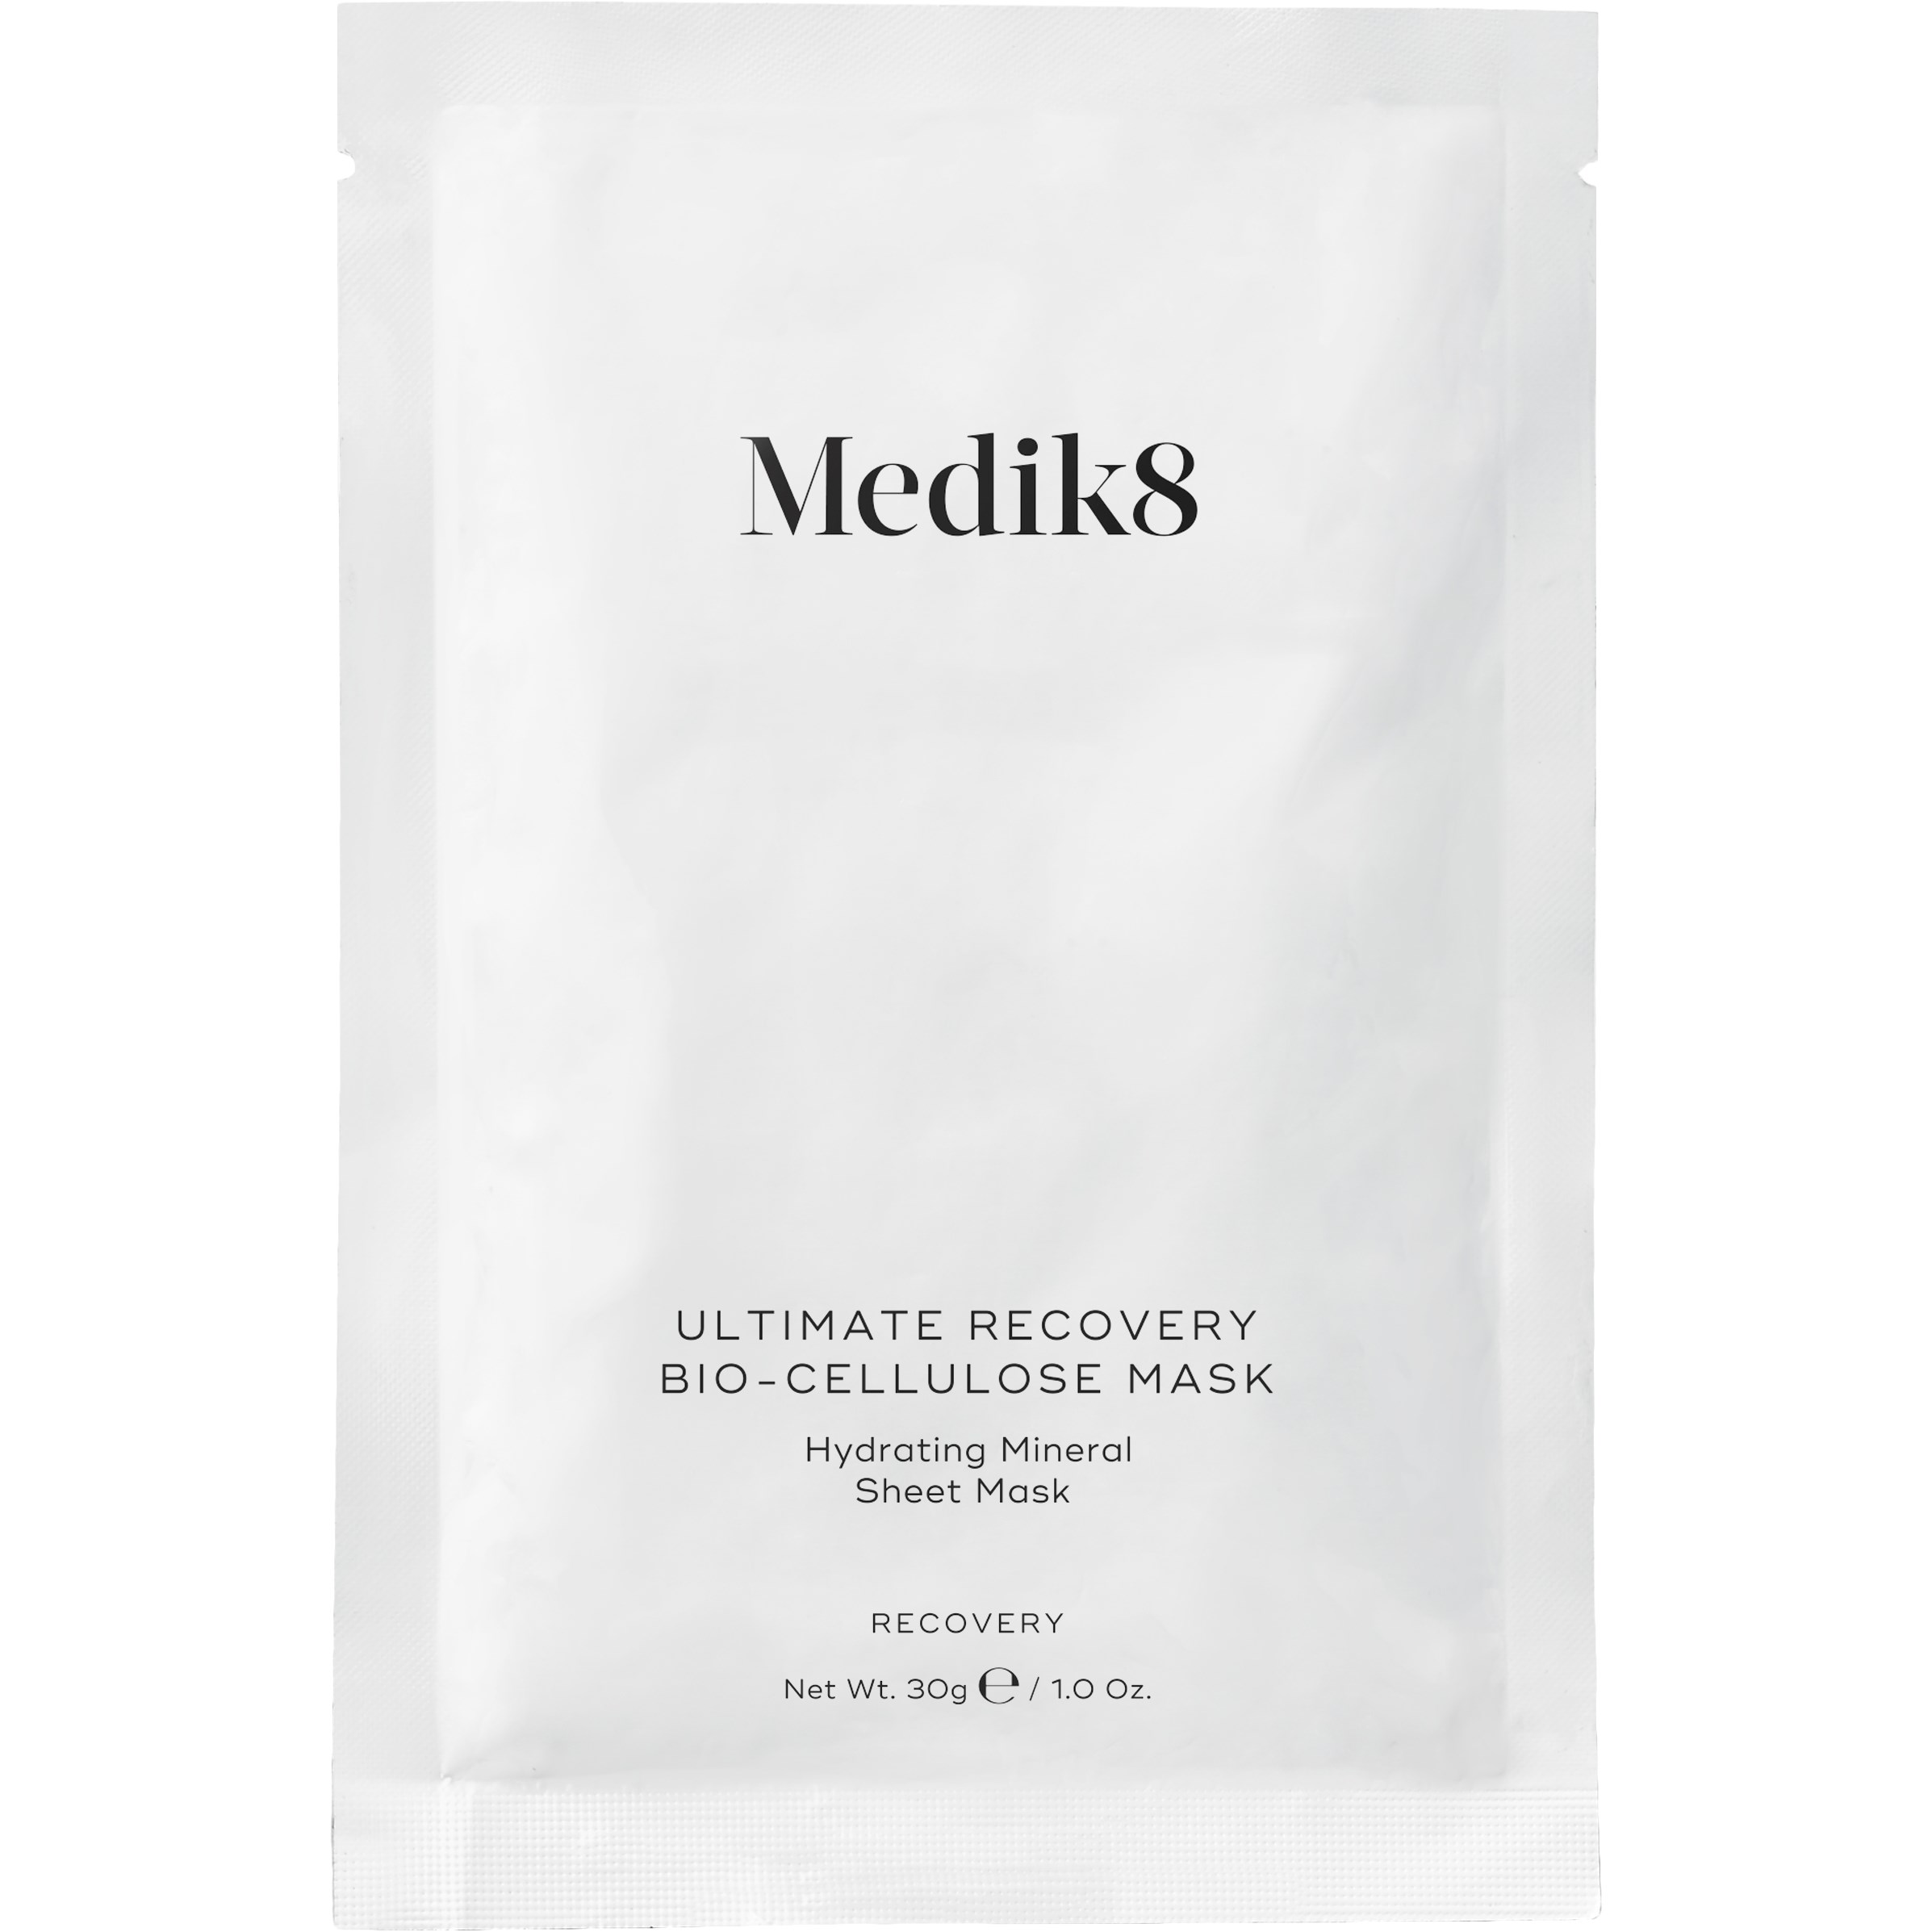 Bilde av Medik8 Recovery Ultimate Recovery Bio-cellulose Mask 6-pack